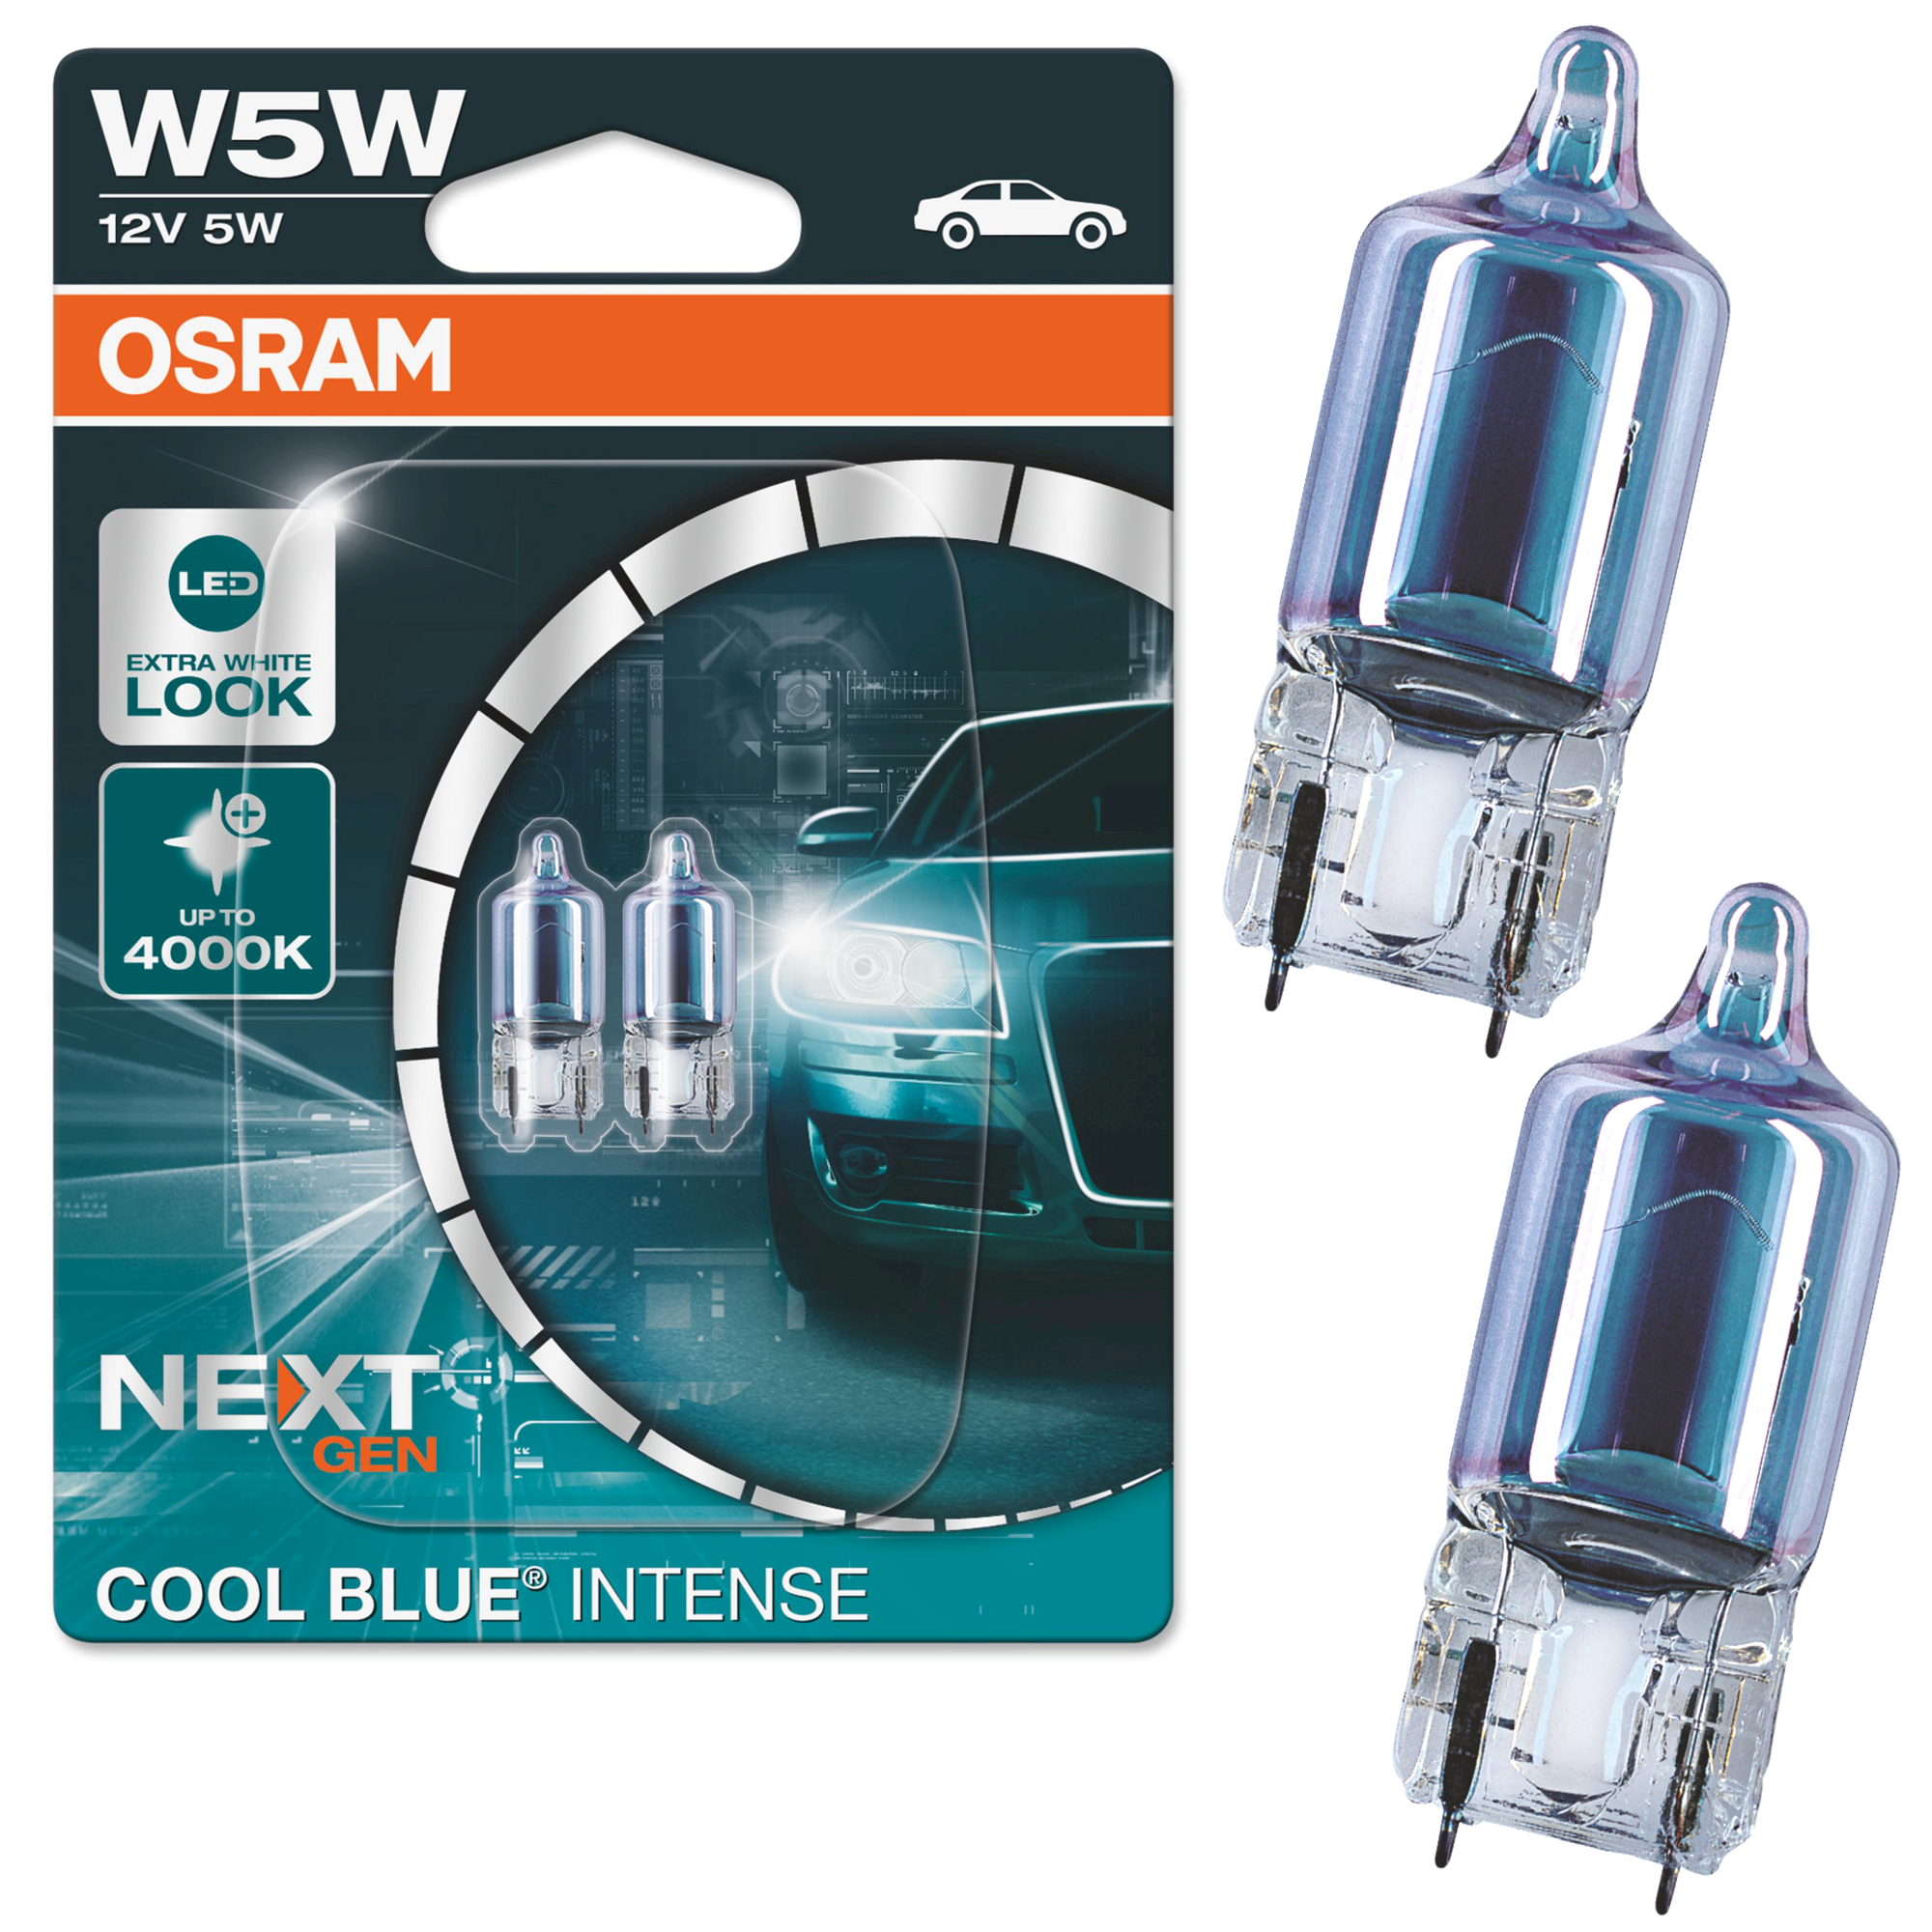 Glühlampe Sekundär OSRAM W5W Cool Blue Intense NextGen 12V/5W, 2 Stück [U]